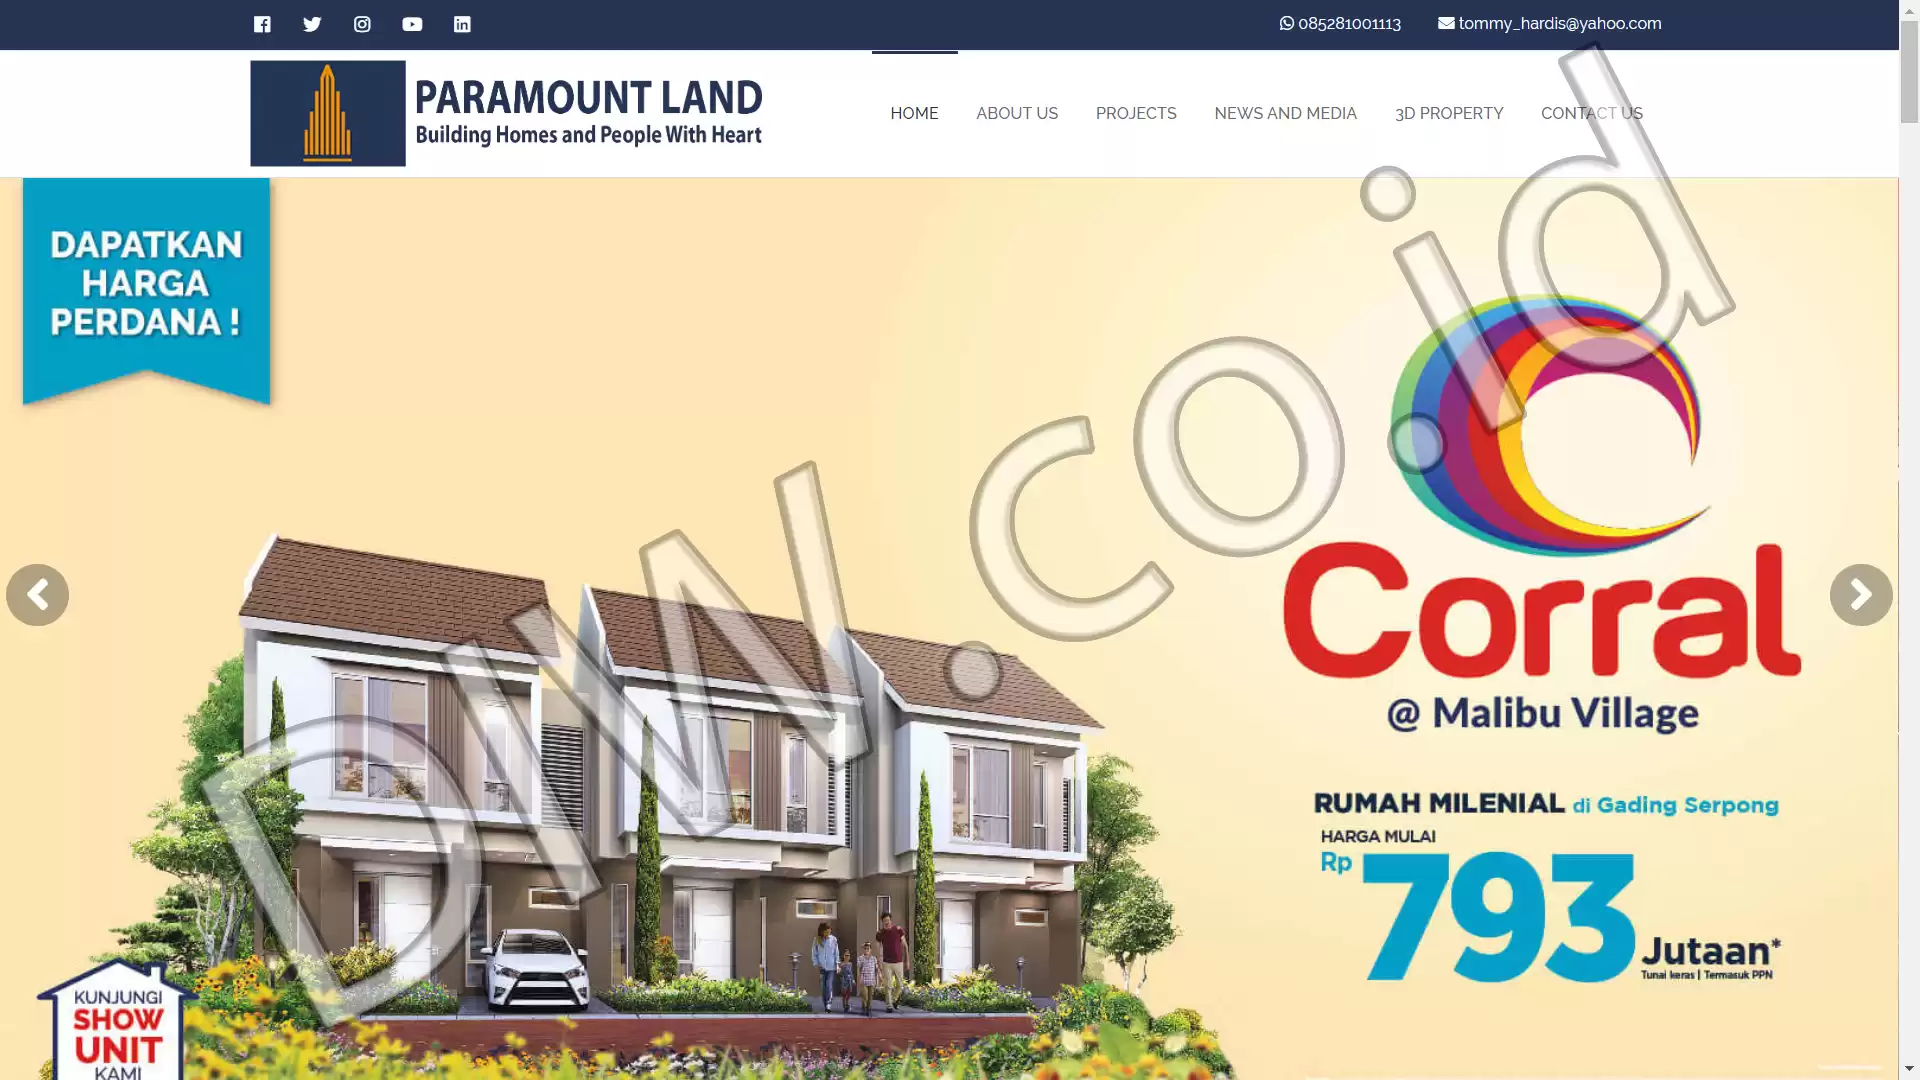 Portfolio - Property Paramount - DIW.co.id (Digital In Website) Jasa Pembuatan Website dan Program Skripsi